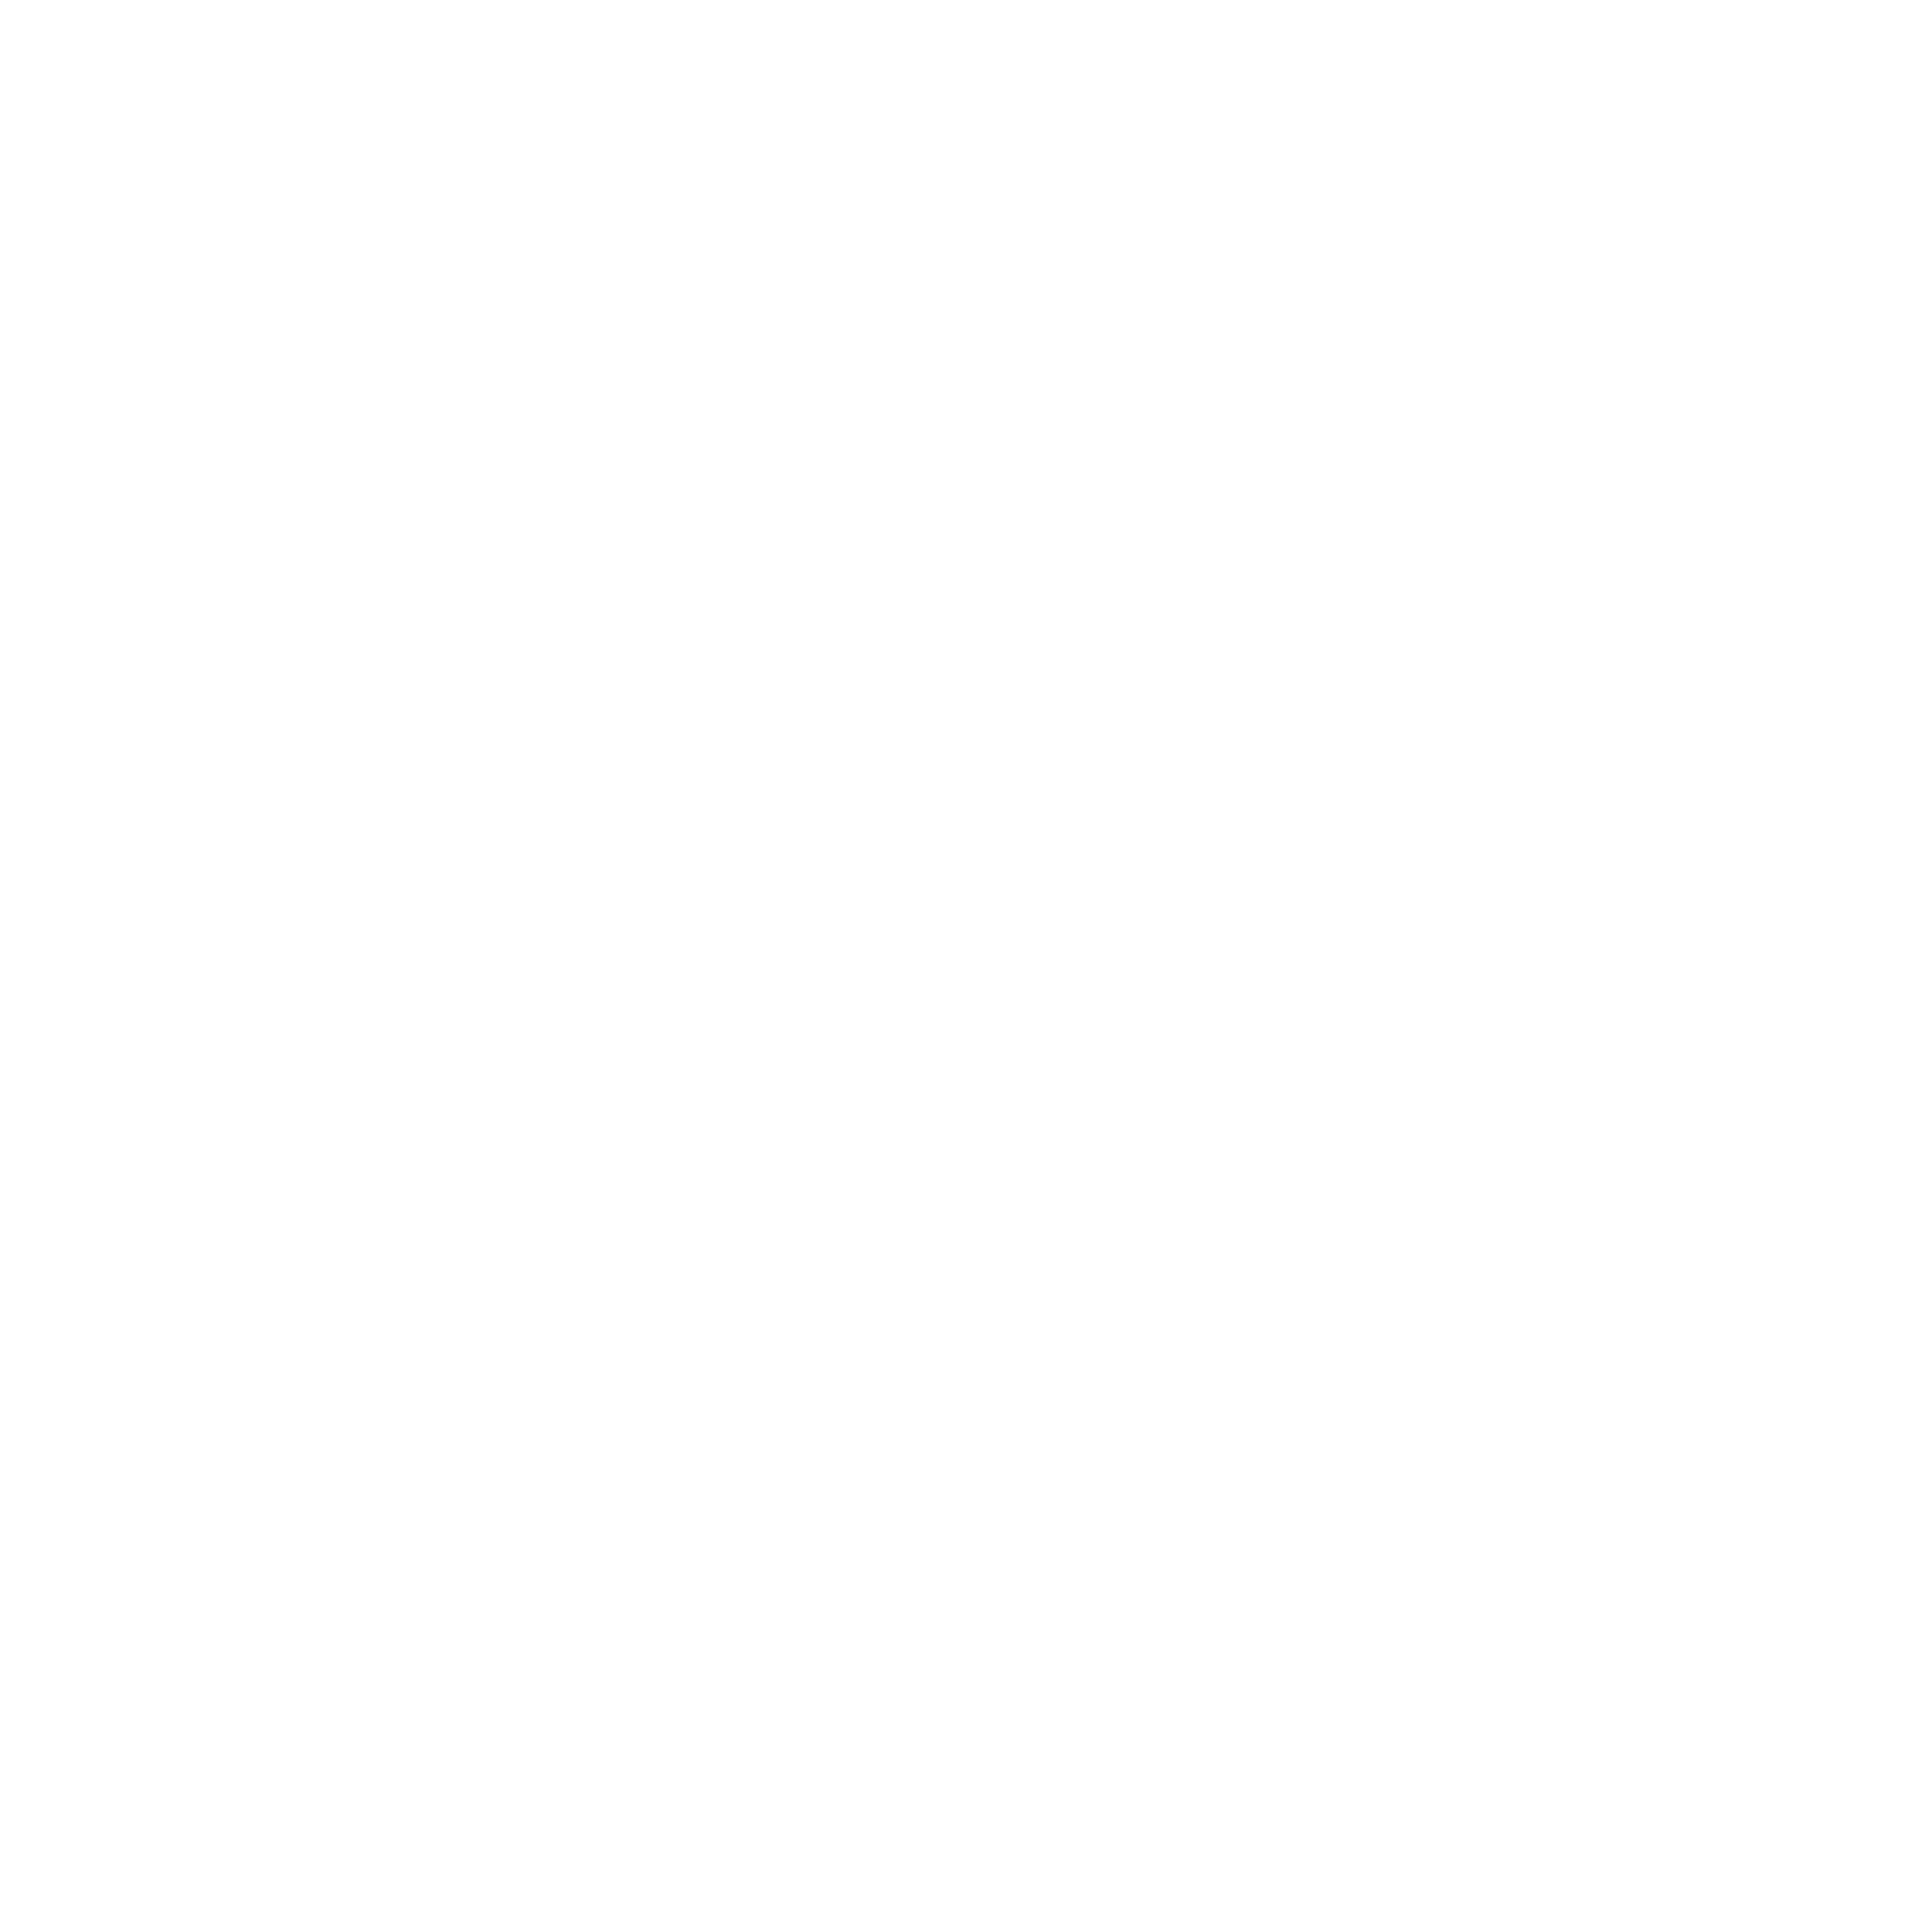 AniCura Elvira Clínica Veterinaria logo